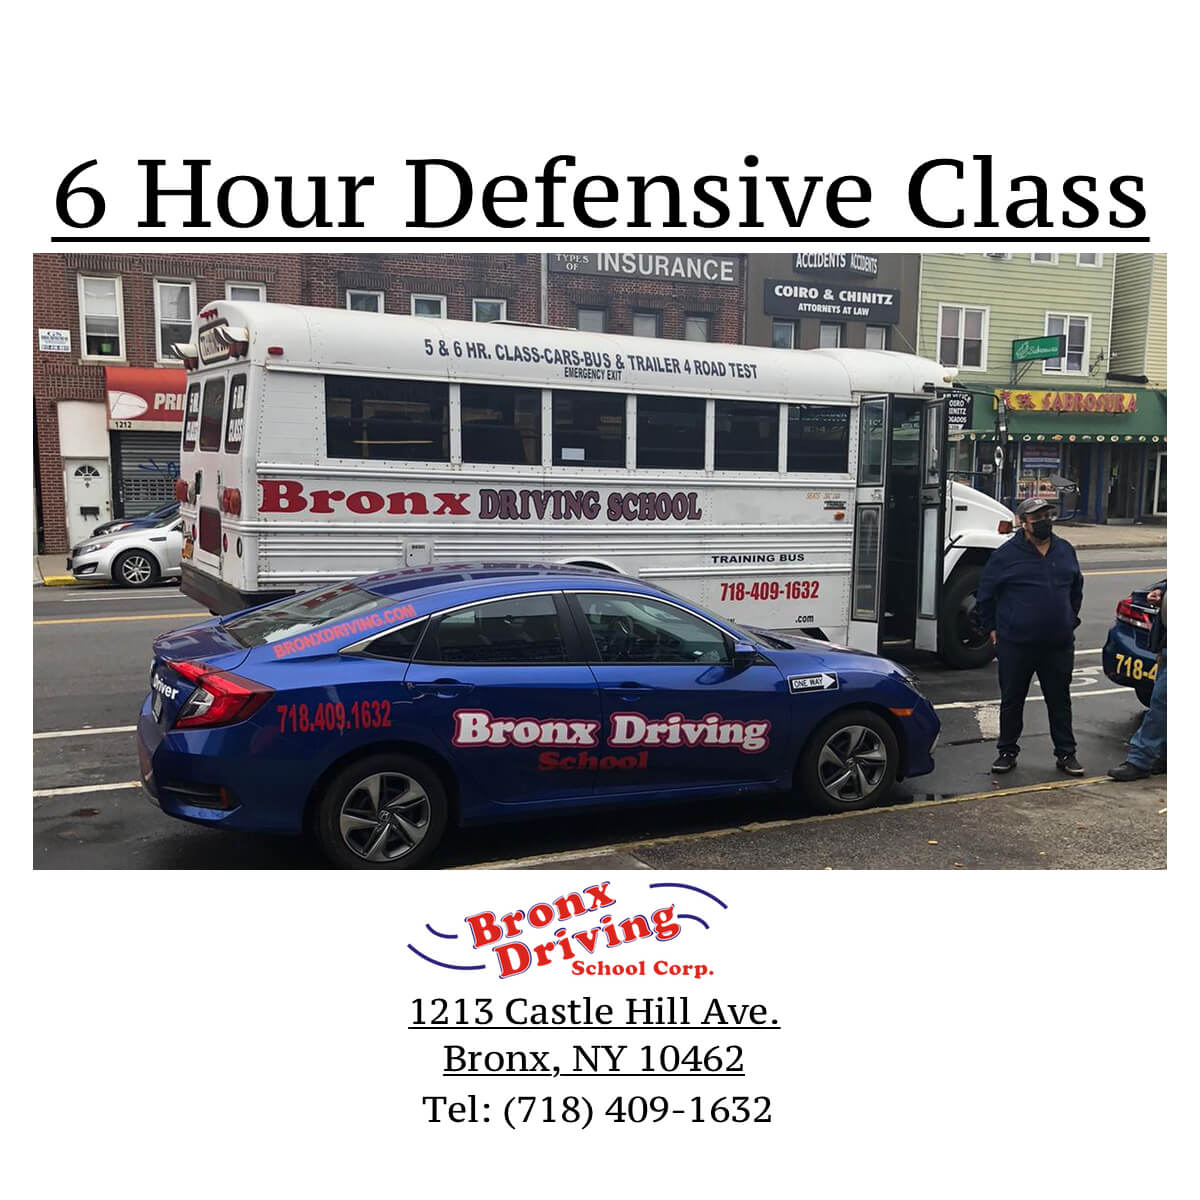 6 Hour Defensive Class - Bronx Driving School